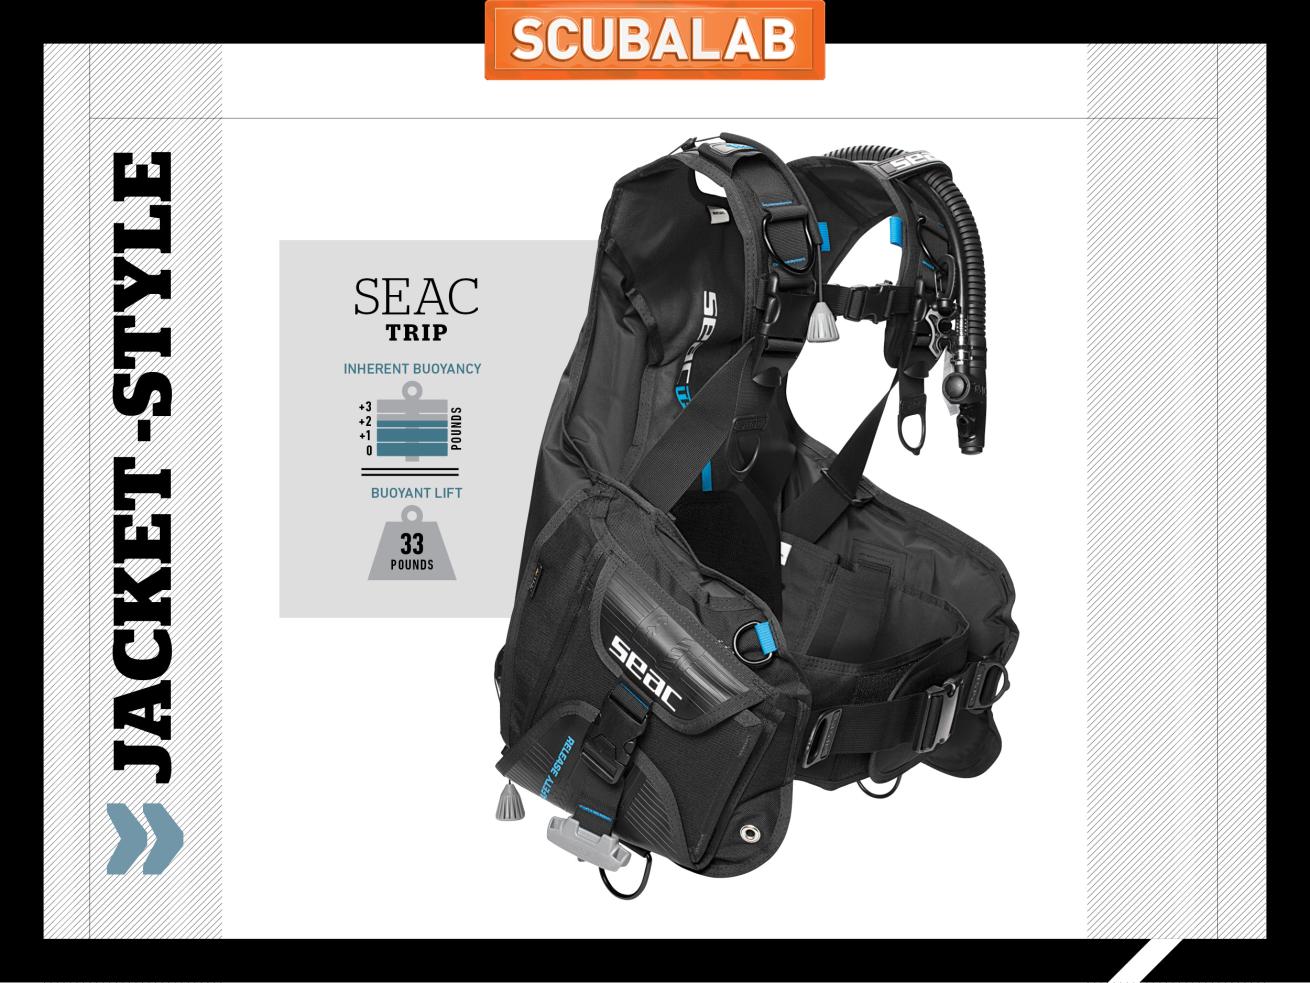 Seac Trip scuba diving BC ScubaLab review